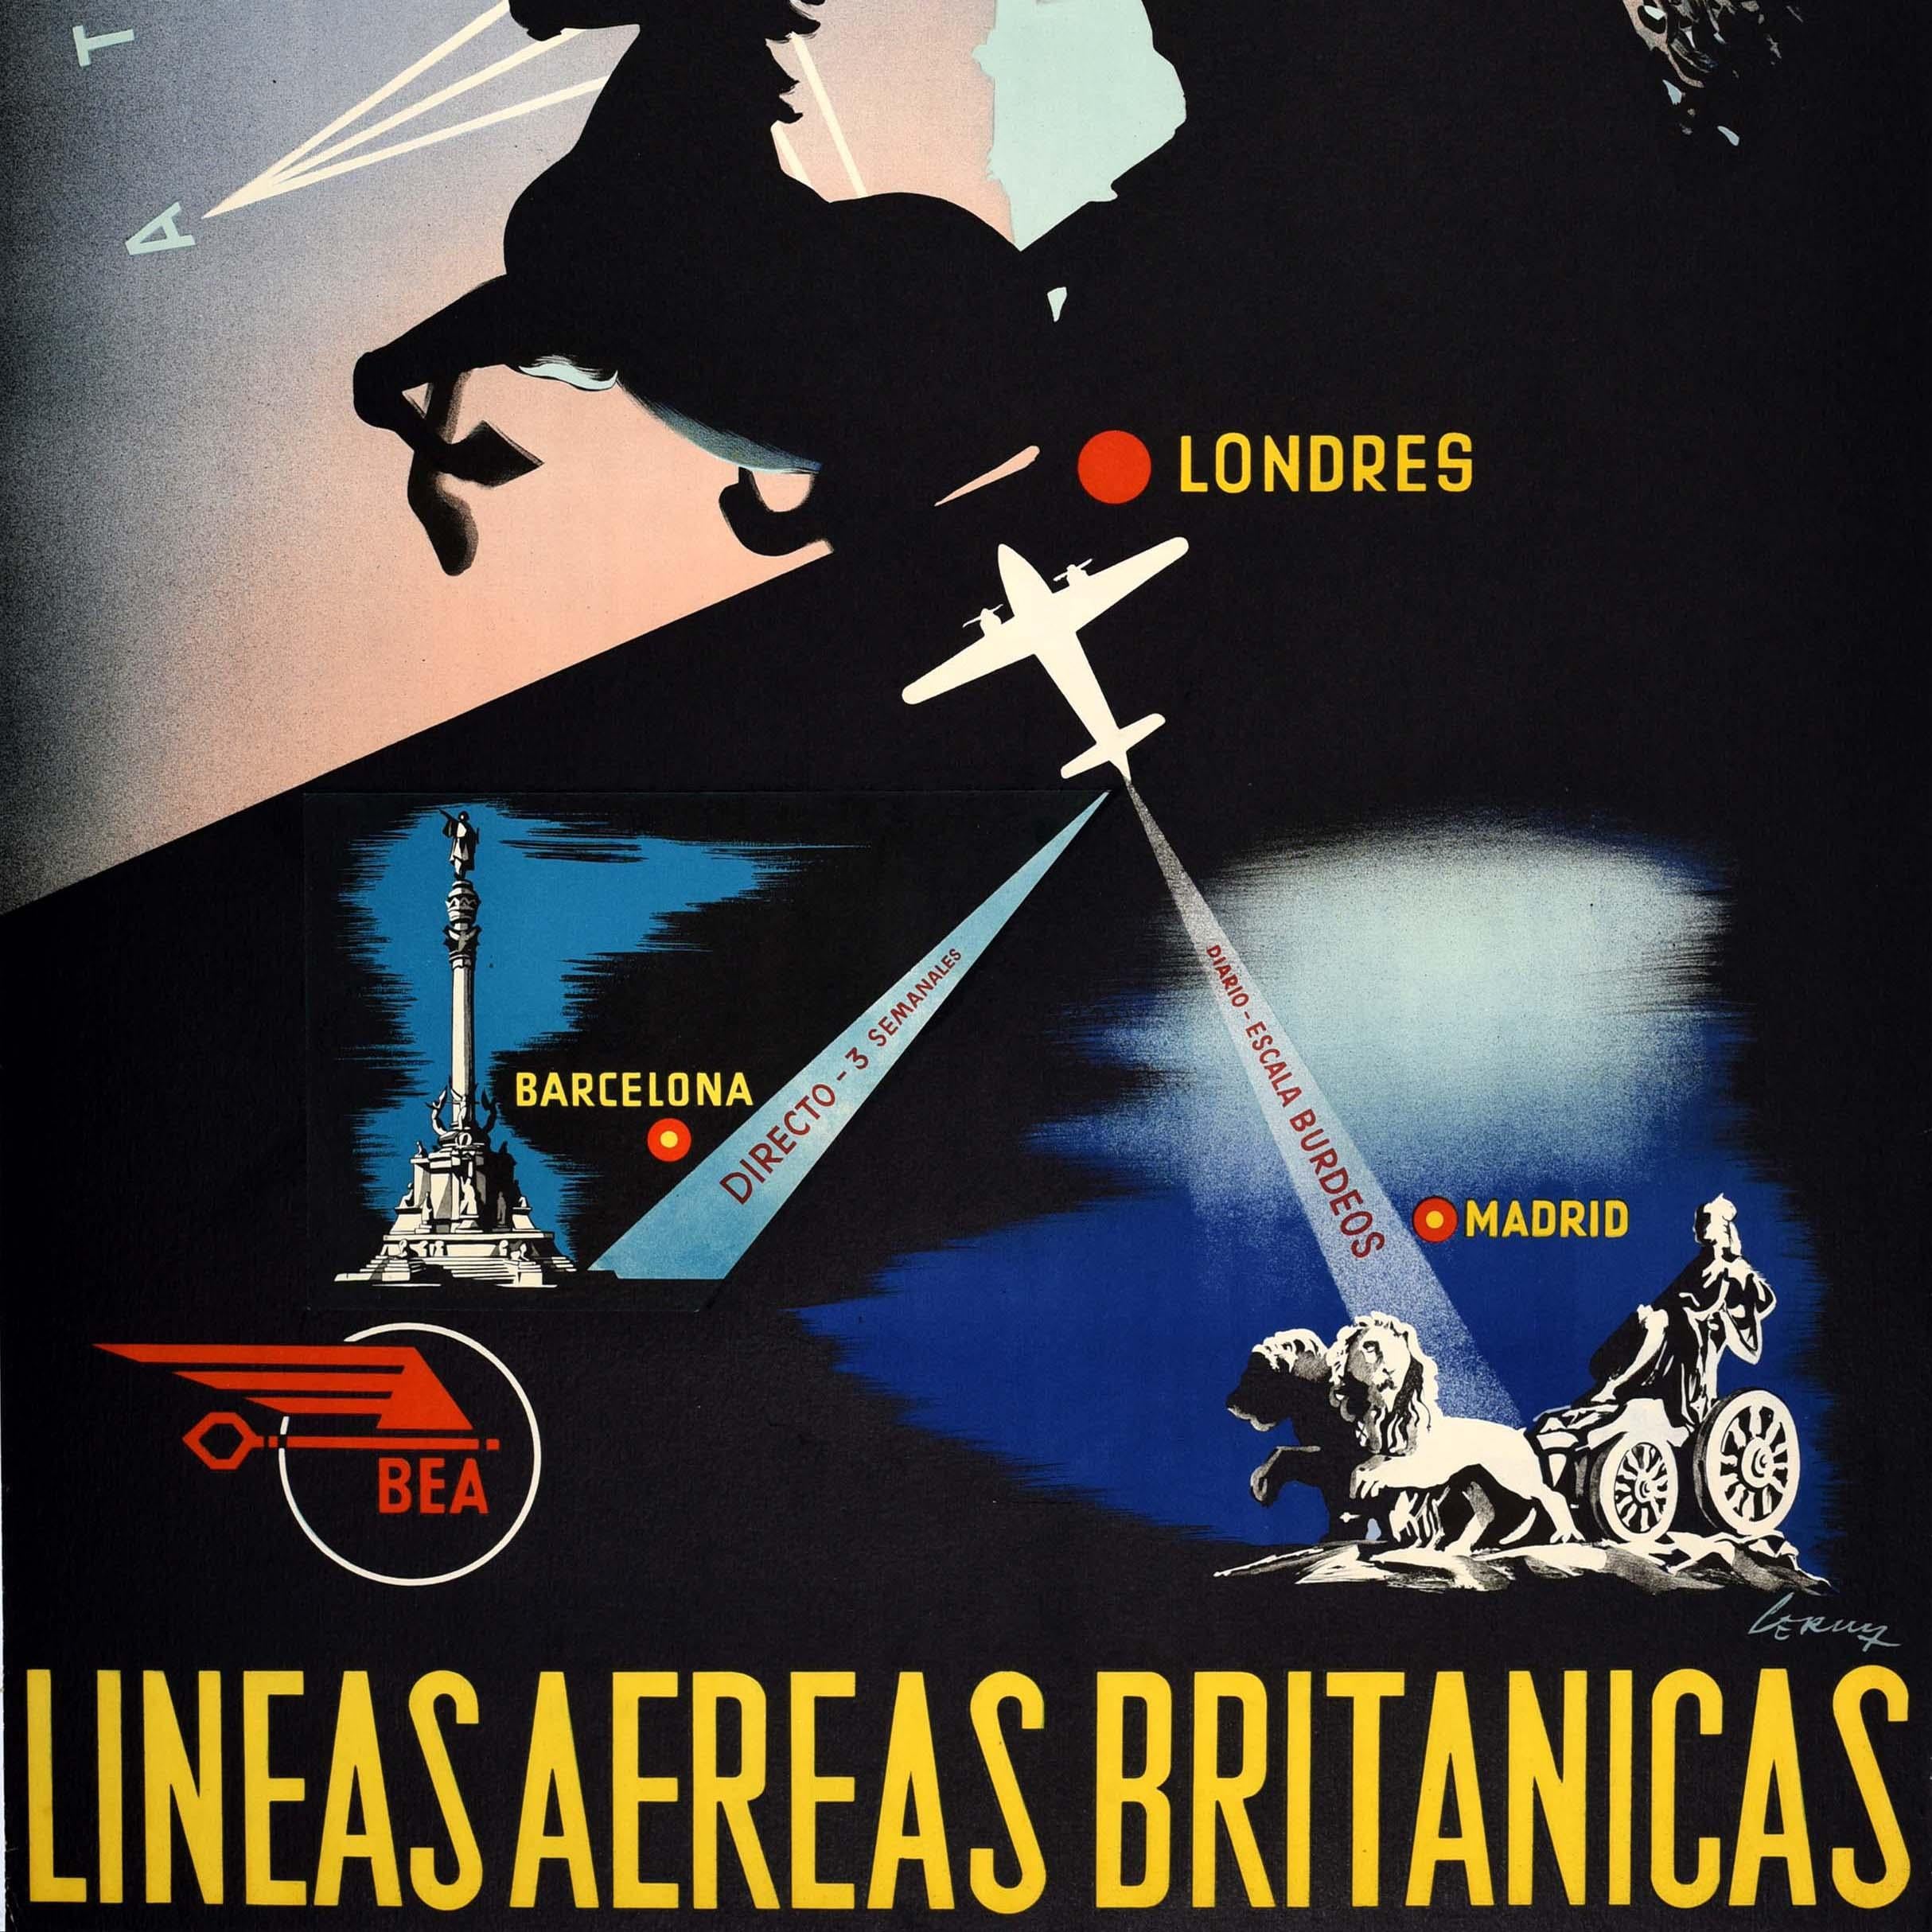 British Original Vintage Travel Advertising Poster BEA Lineas Aereas Britanicas London For Sale